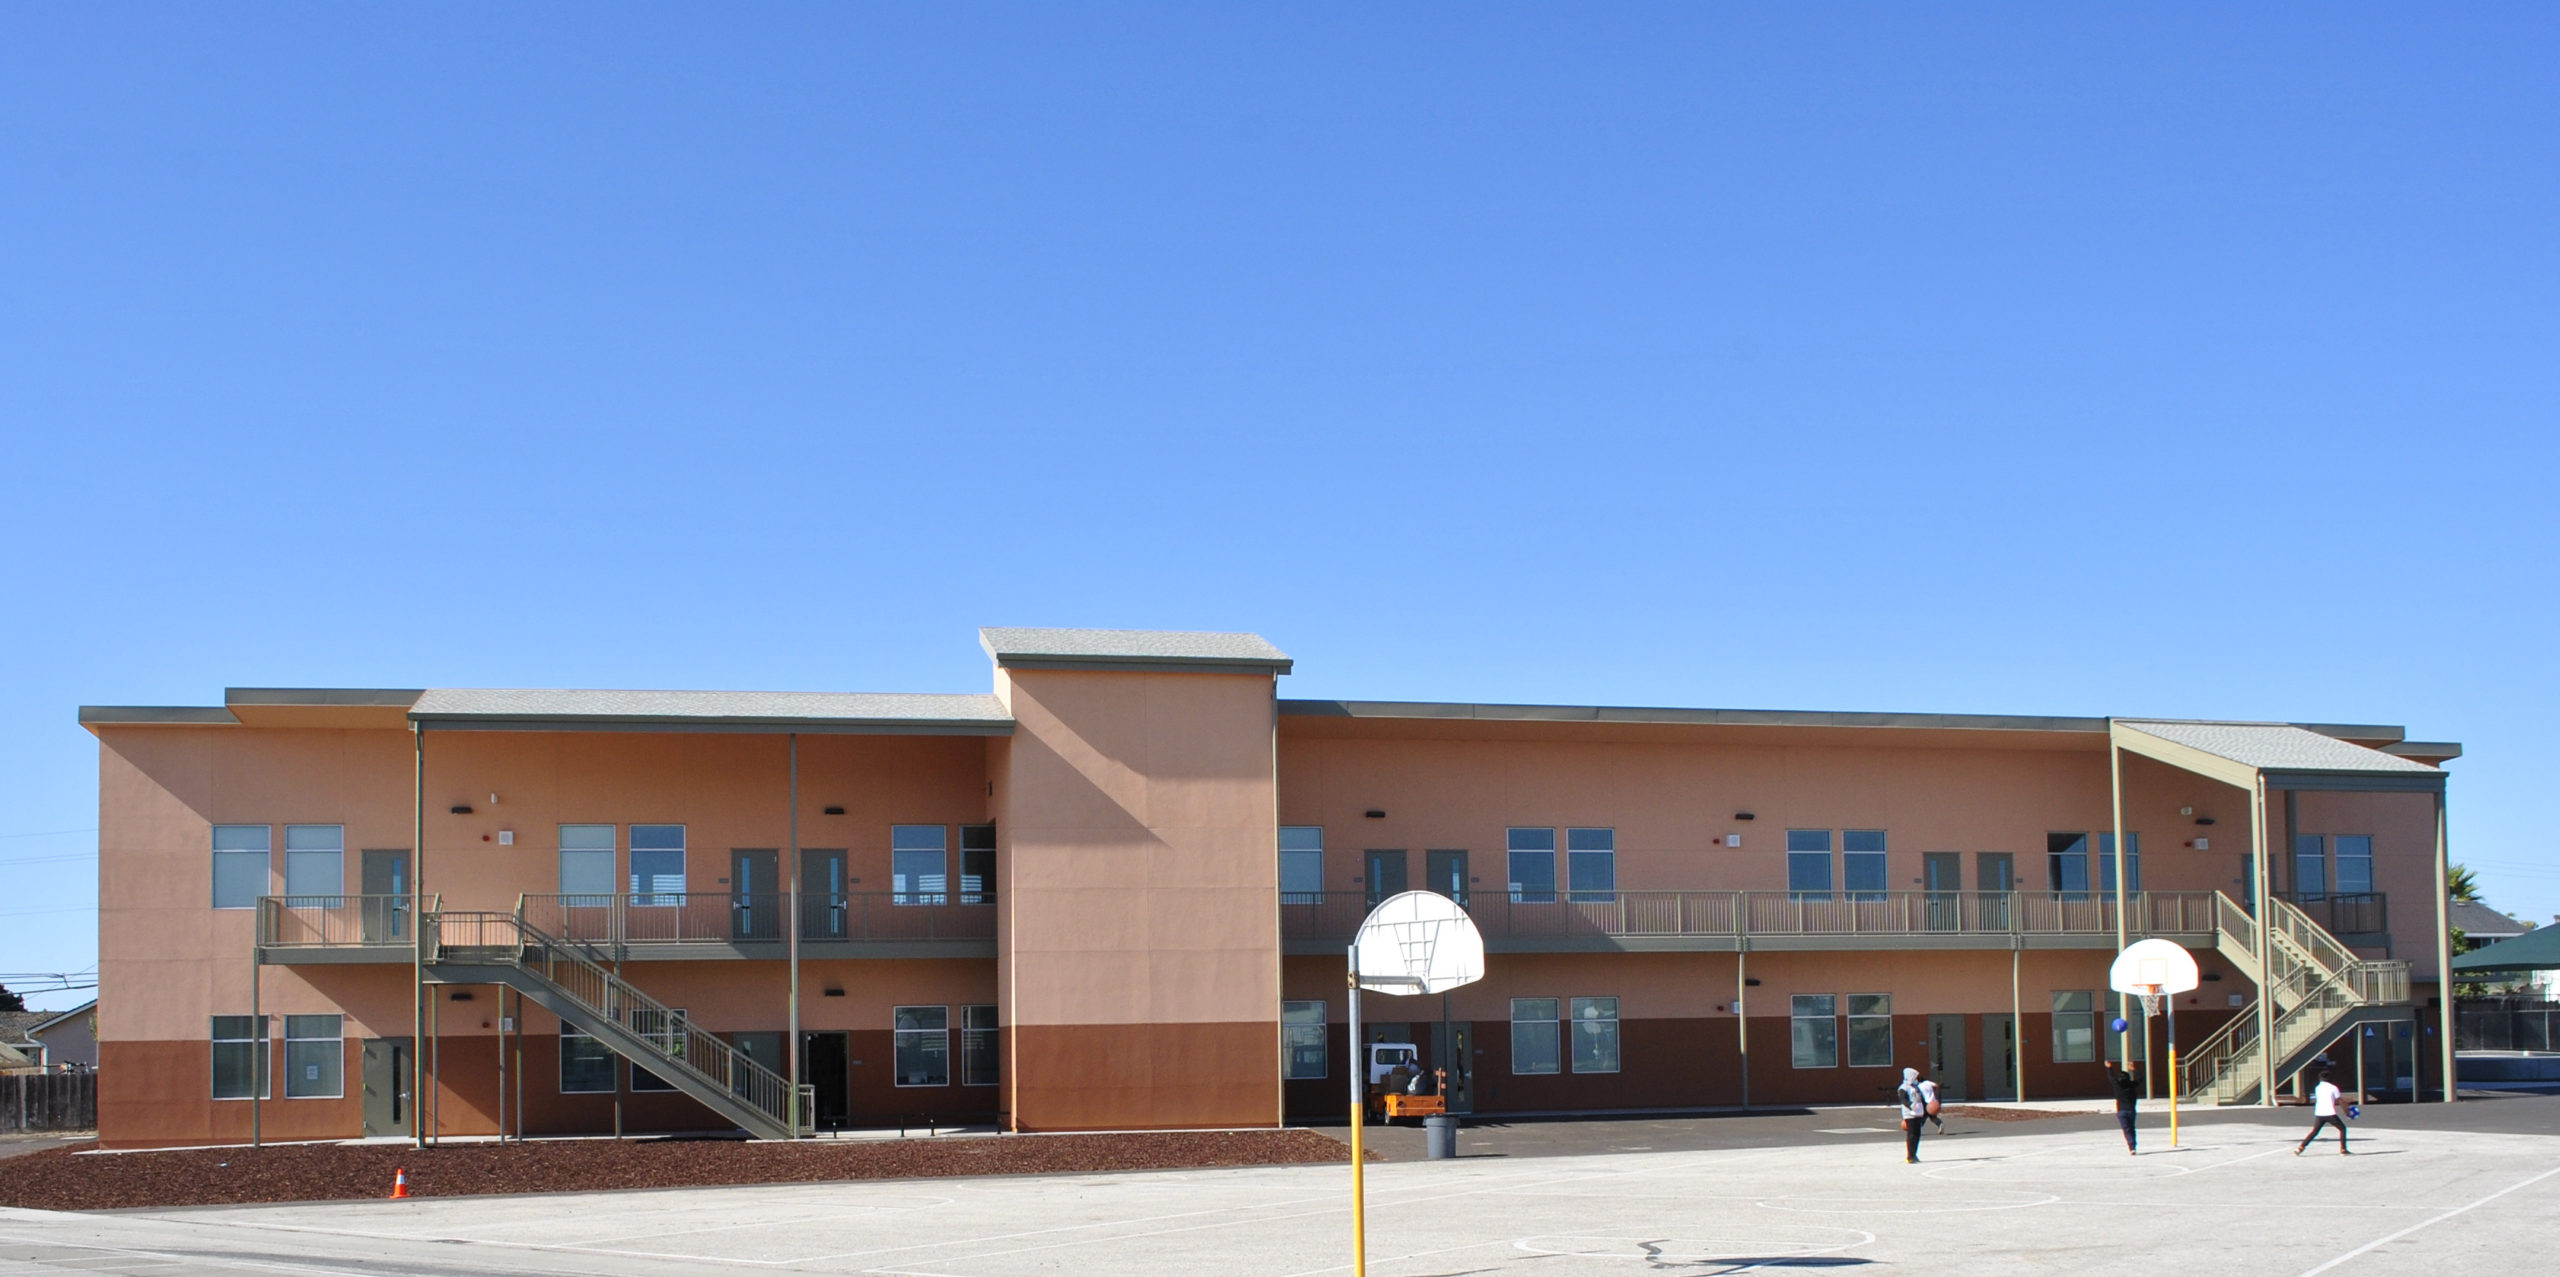 Fremont Elementary School 2-Story Modular Classroom Building Exterior